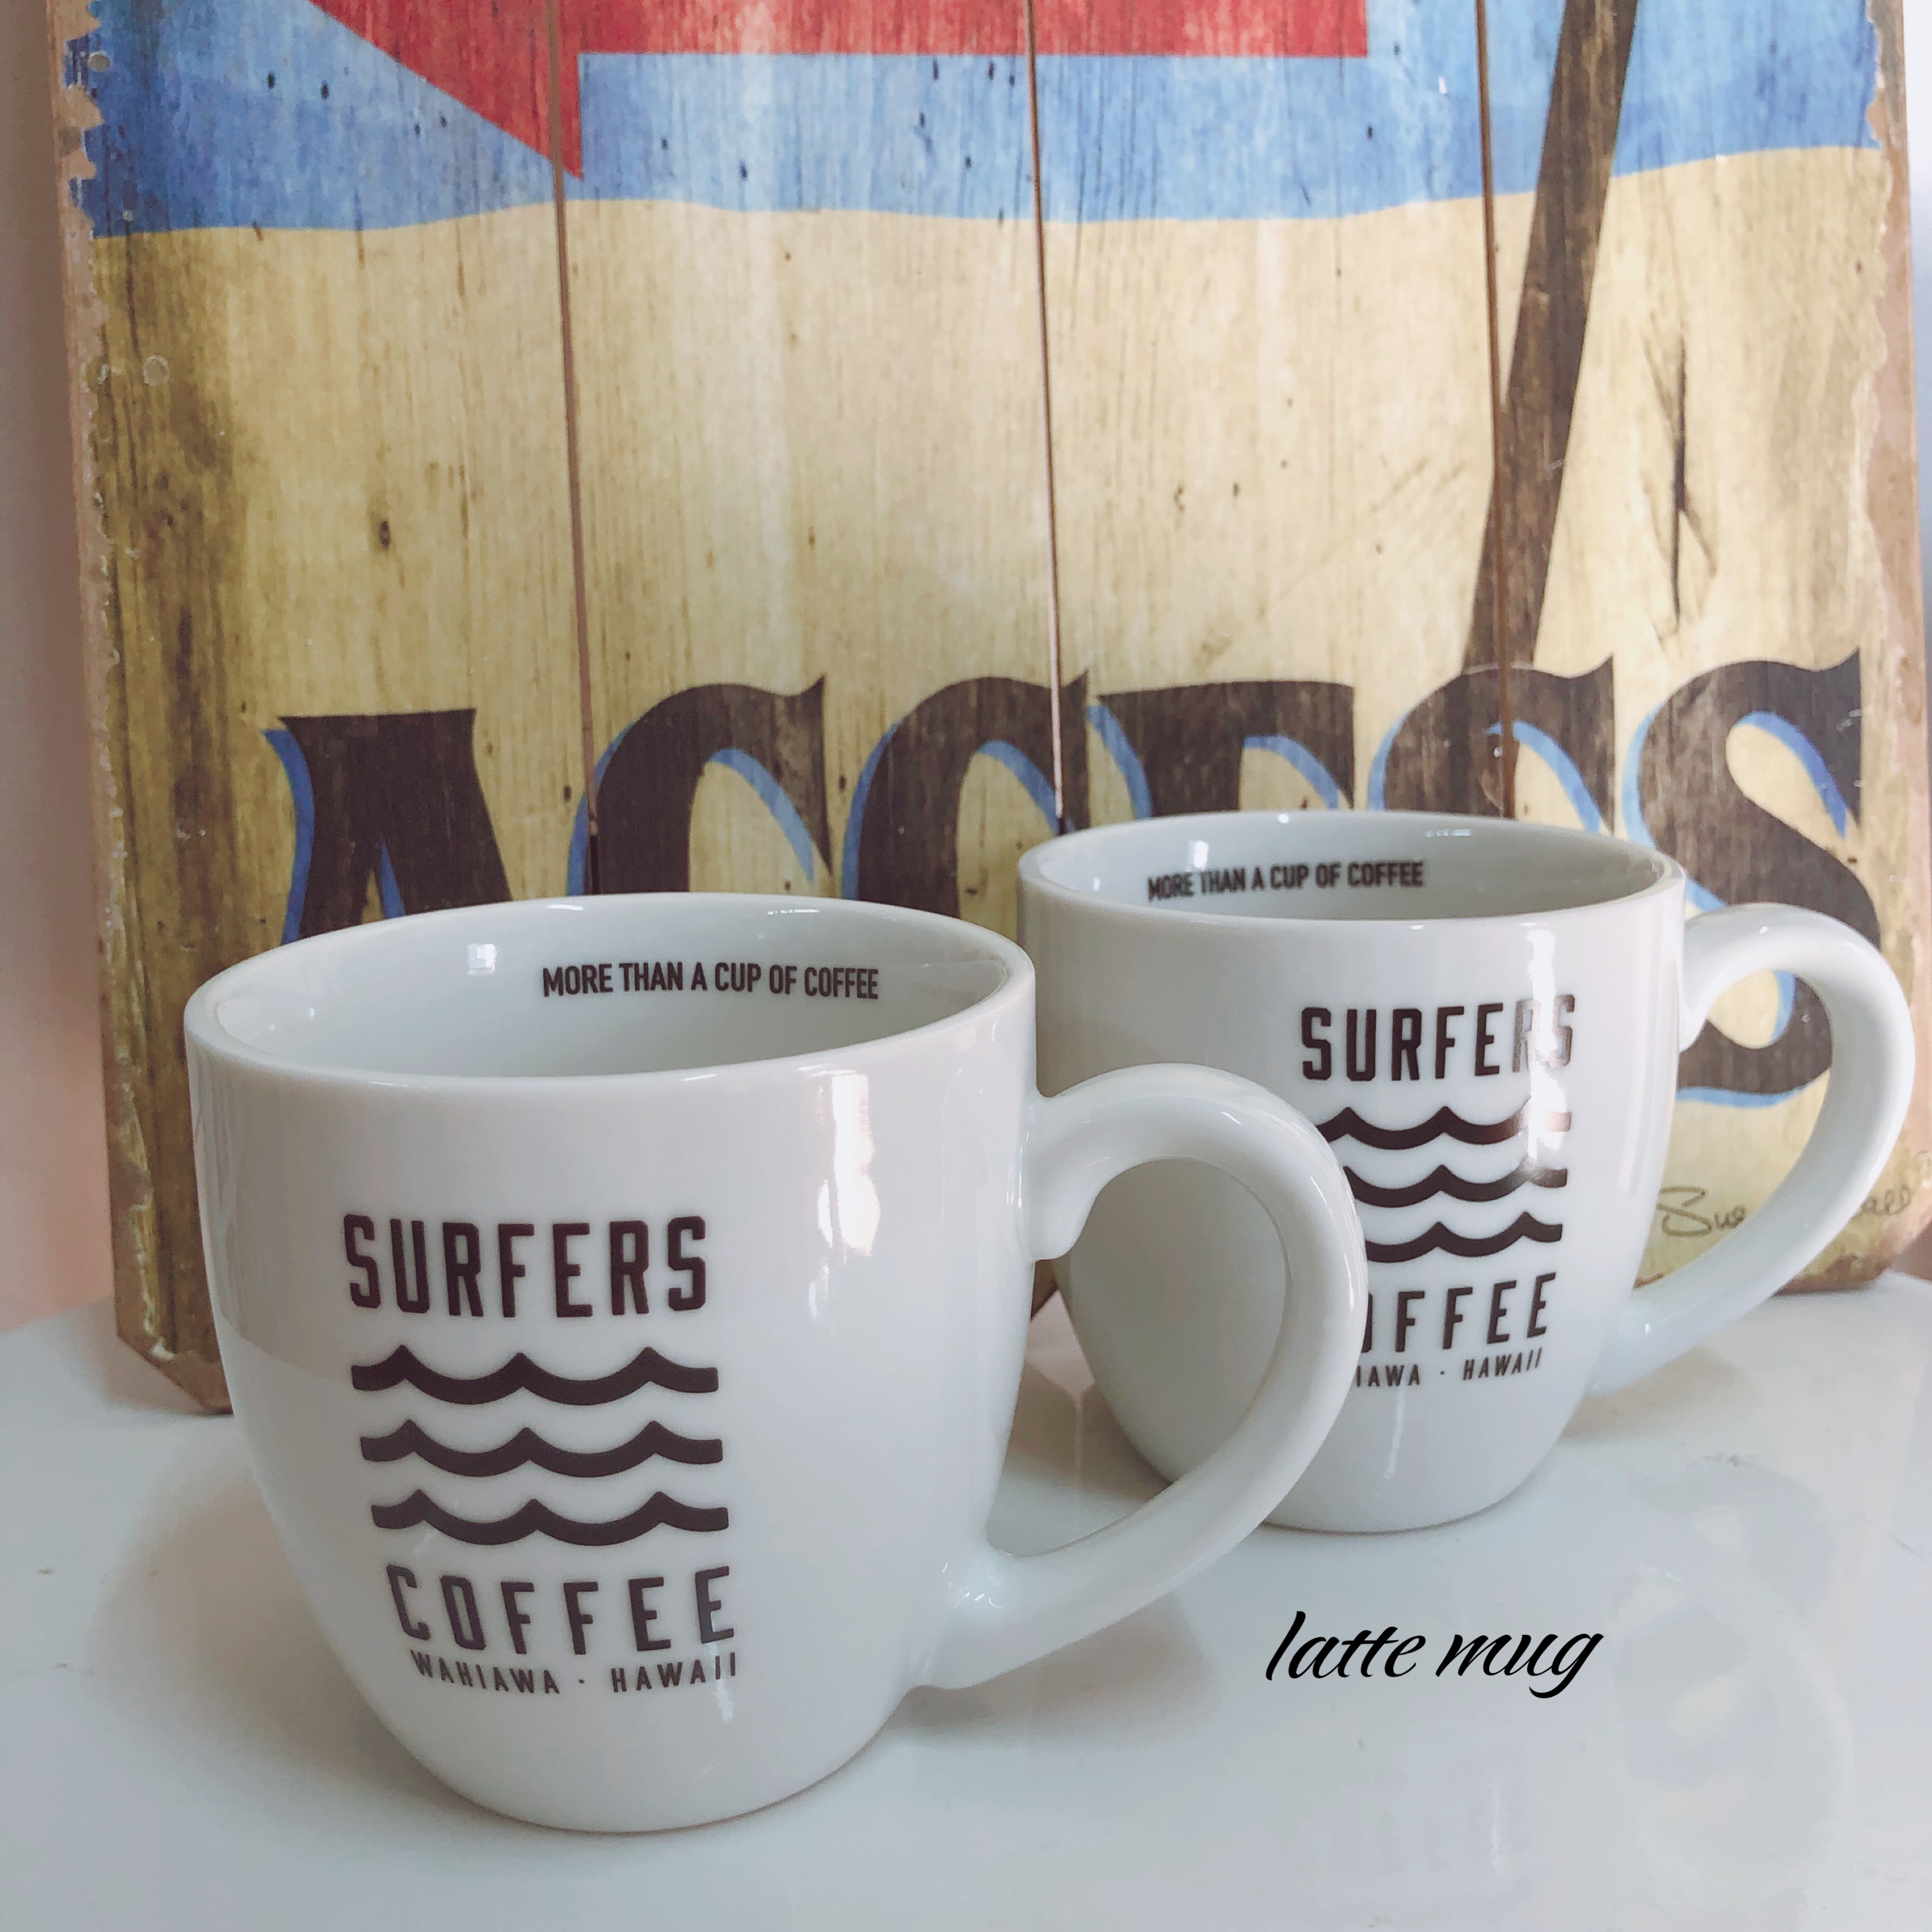 SURFERS COFFEE@e}O